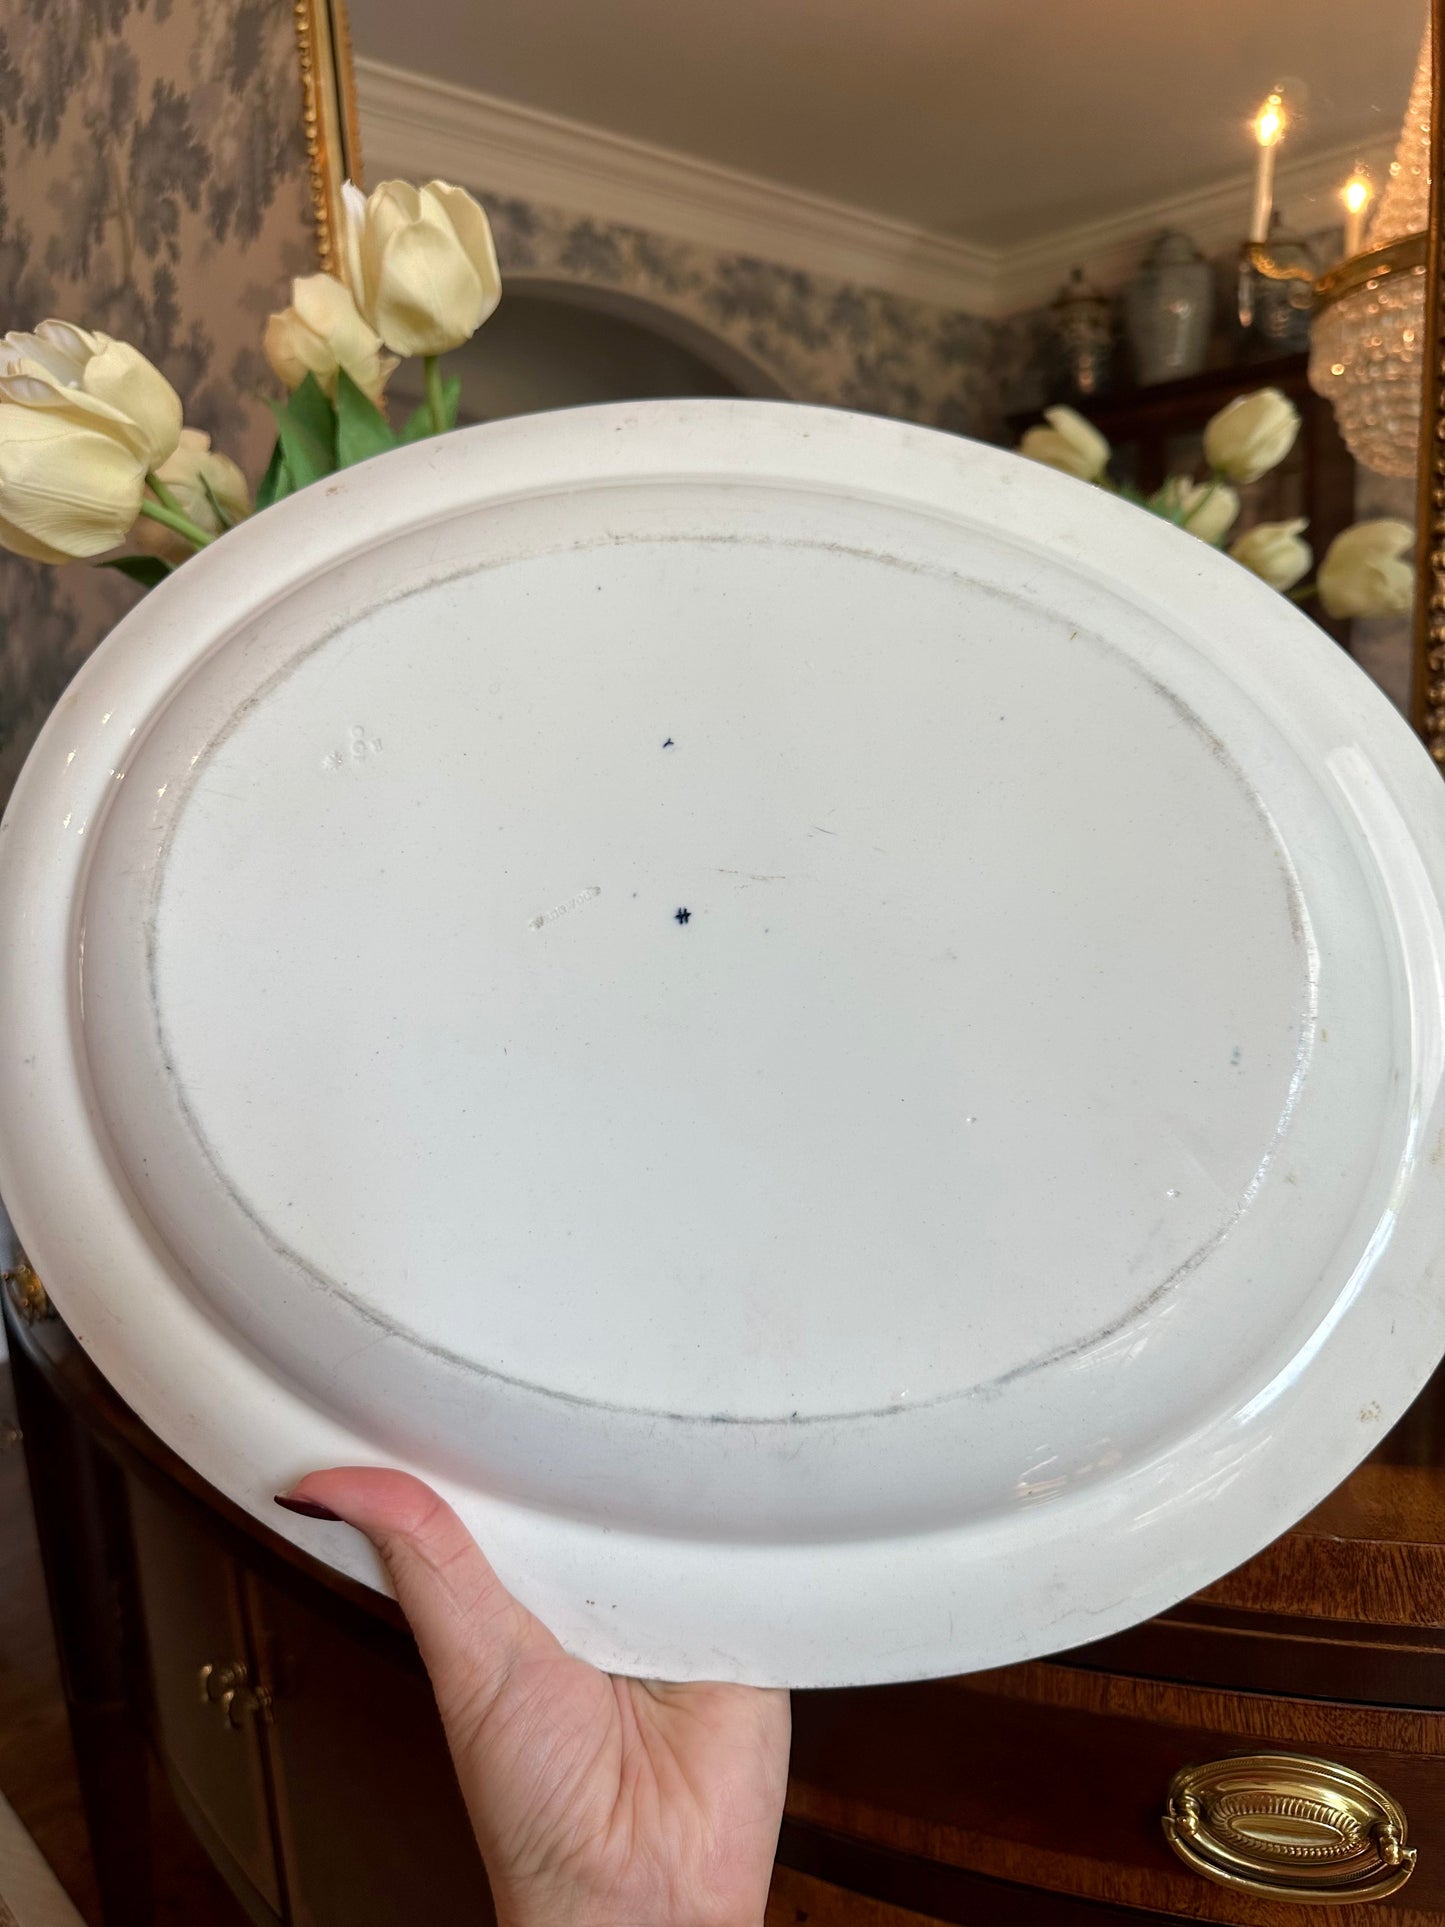 Beautiful 19thc Antique Wedgwood Platter, 16.75” x 14.25” - Pristine!